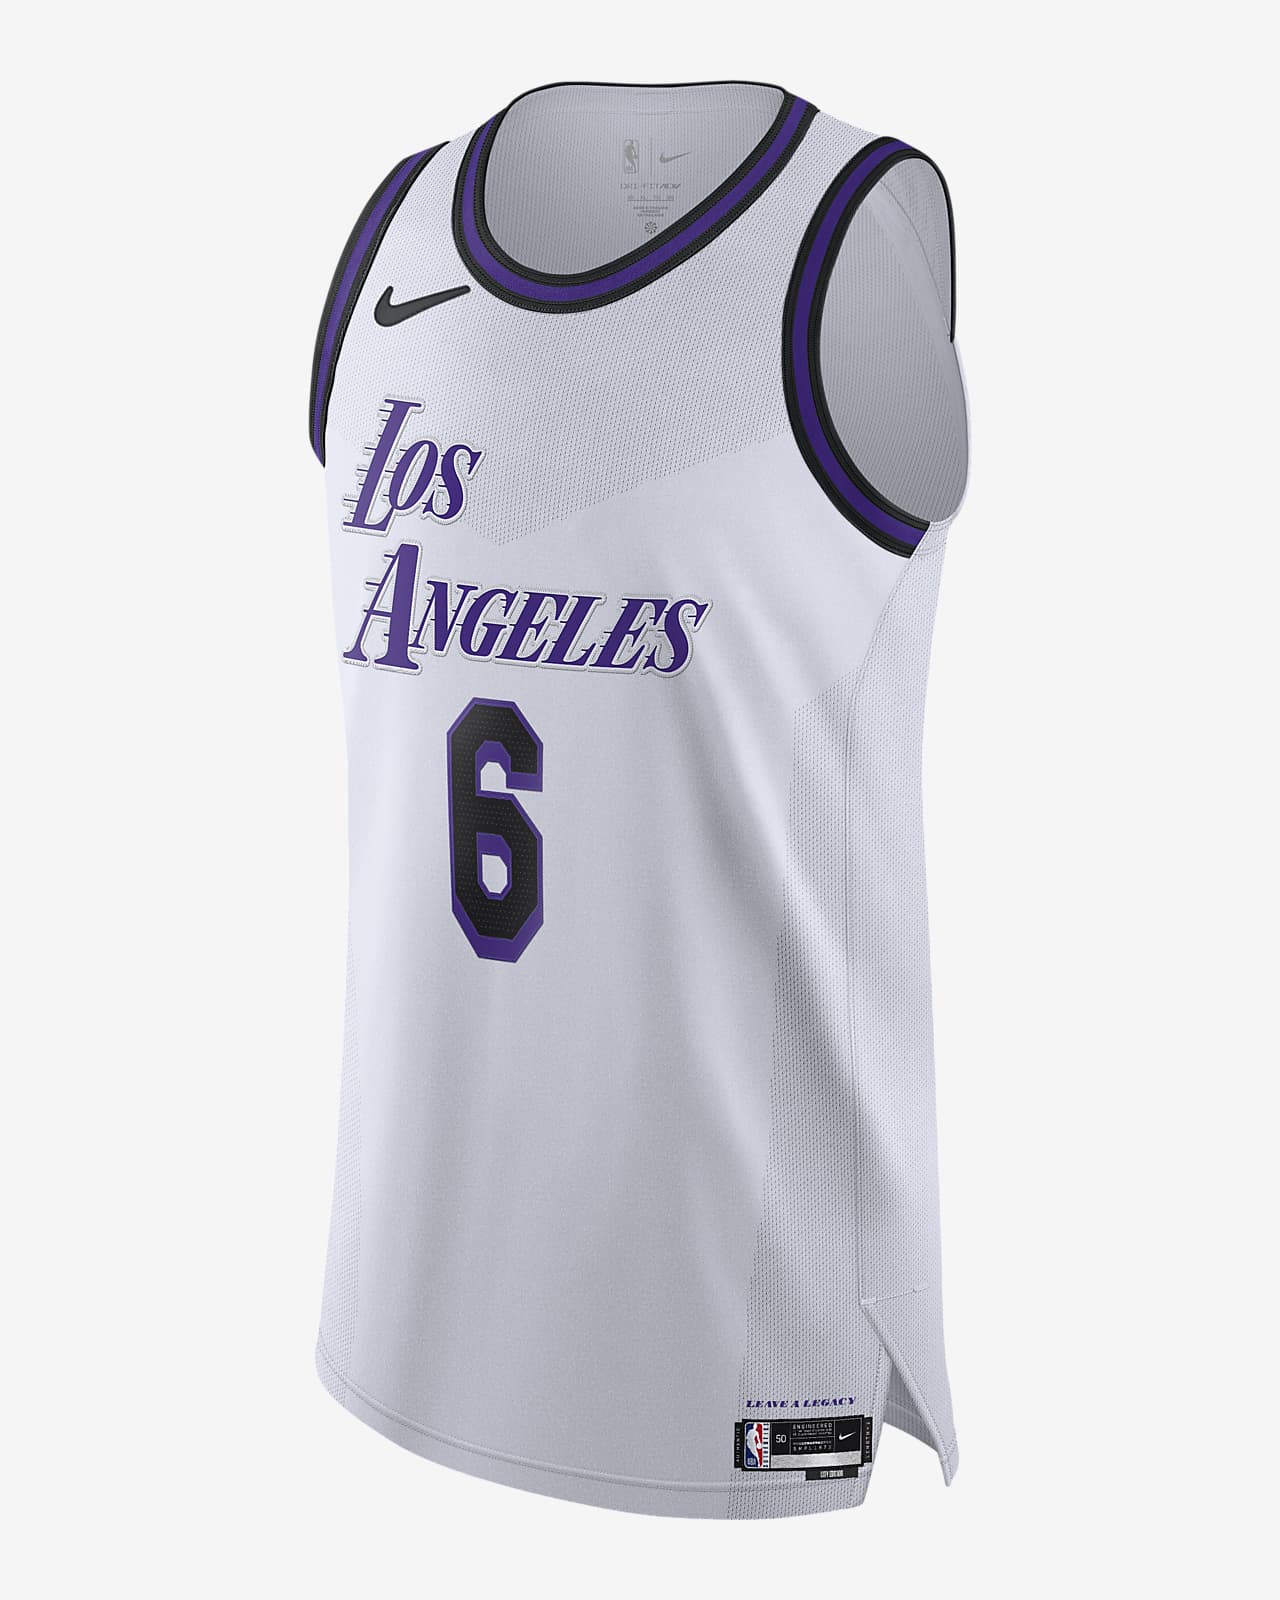 Jersey Nike ADV NBA Authentic para hombre Los Angeles City Nike.com